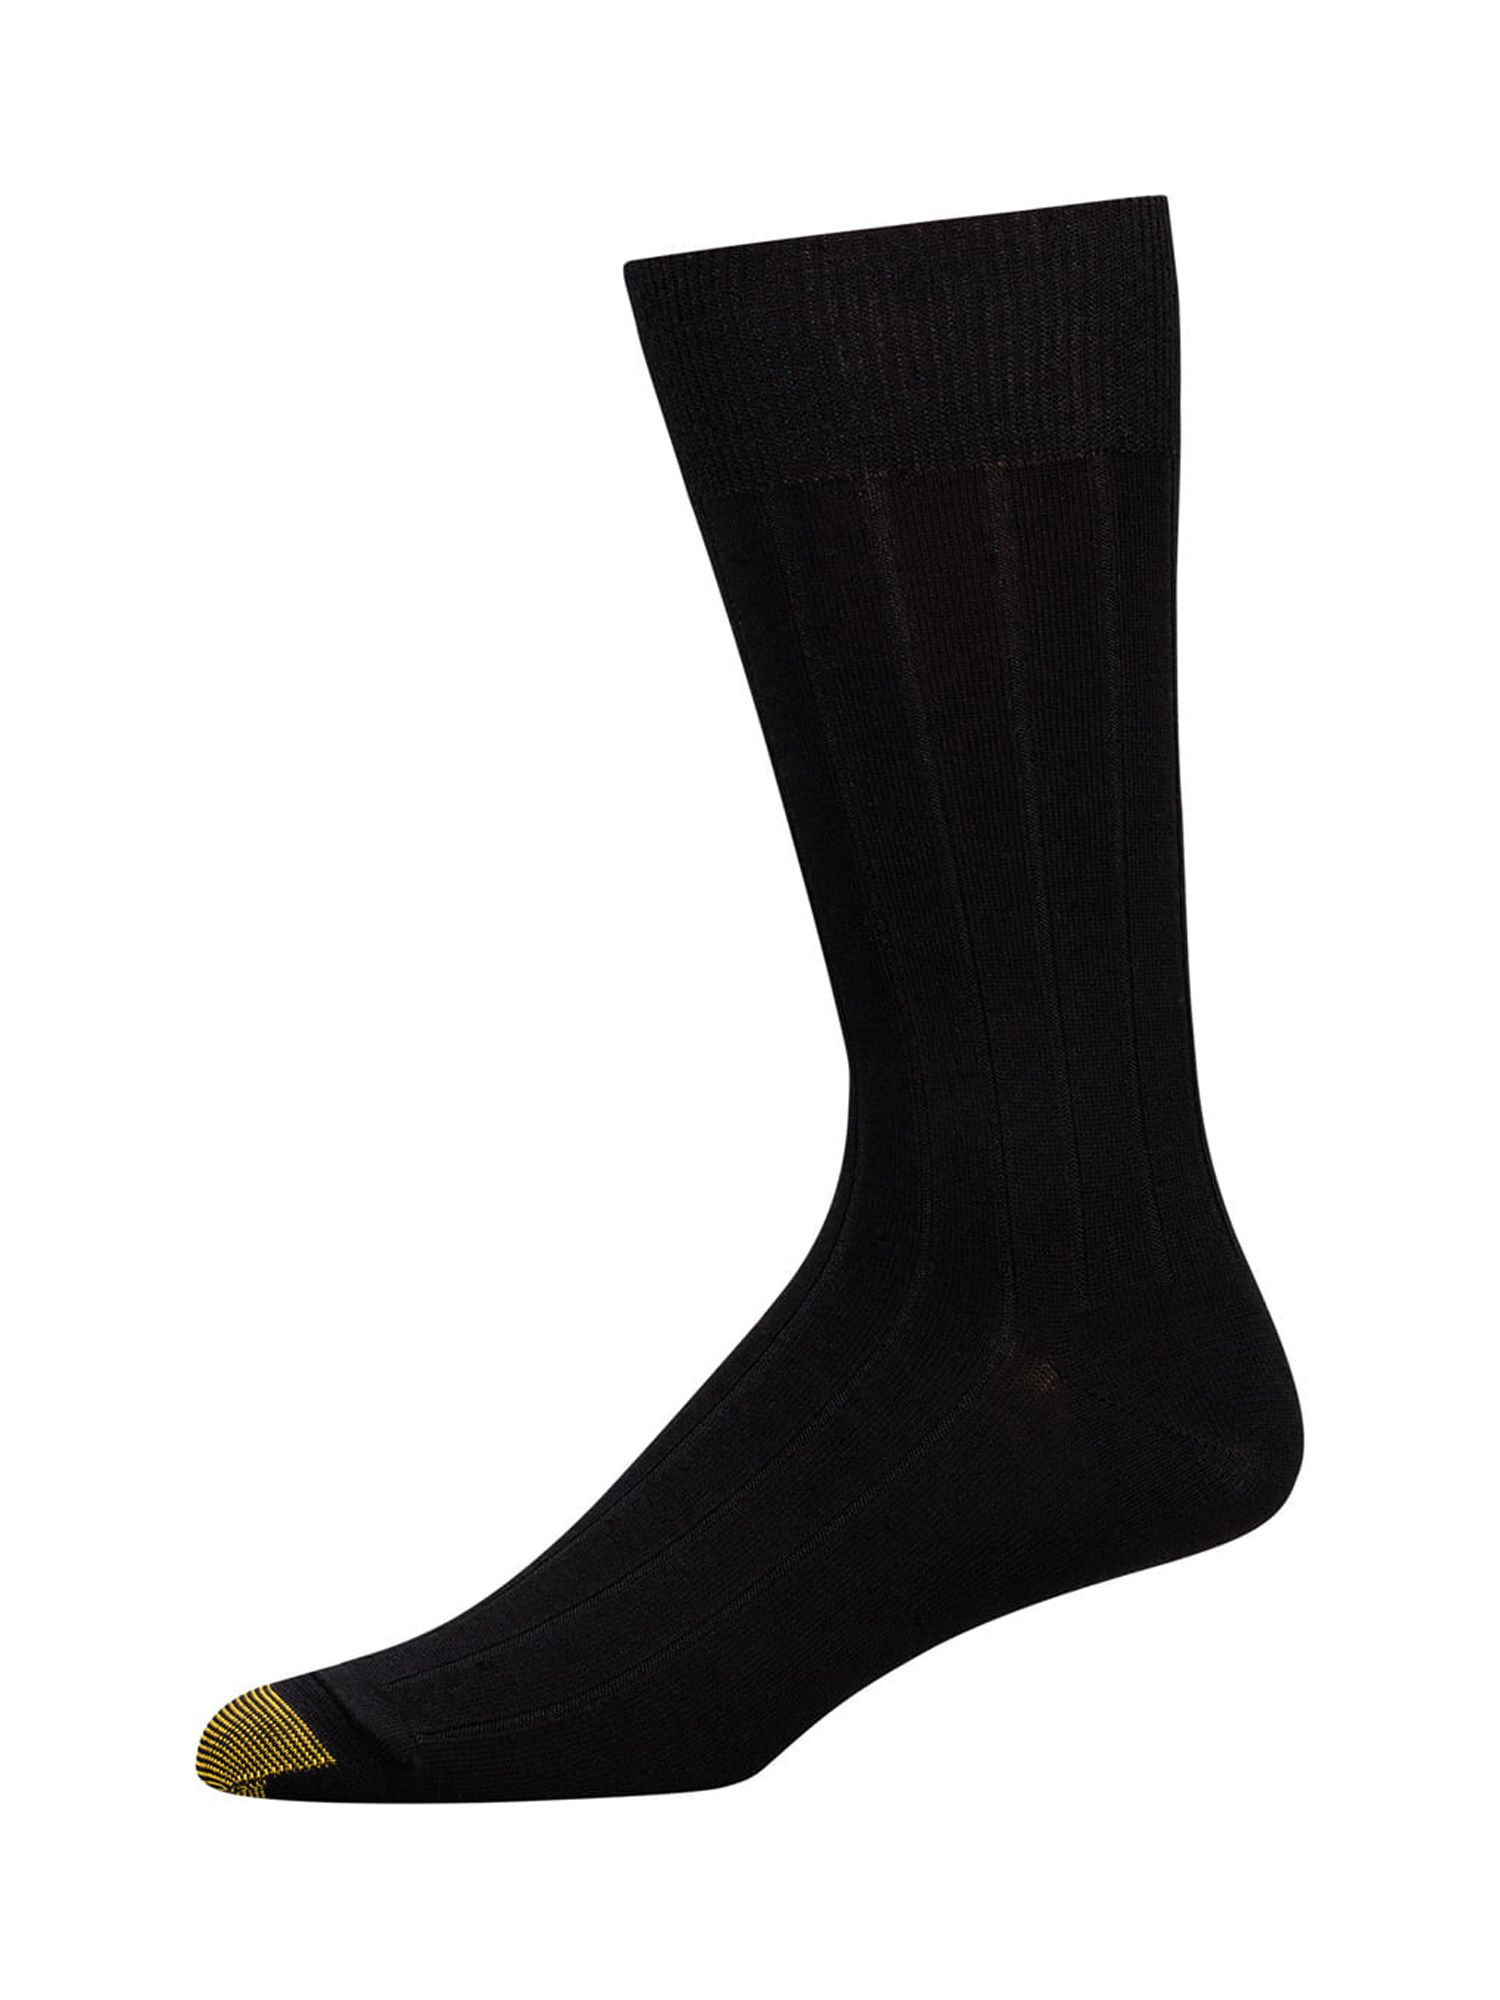 Gold Toe Adult Men's Hampton Reinforced Toe Dress Socks, OS One Size, 3 Pack - image 2 of 3